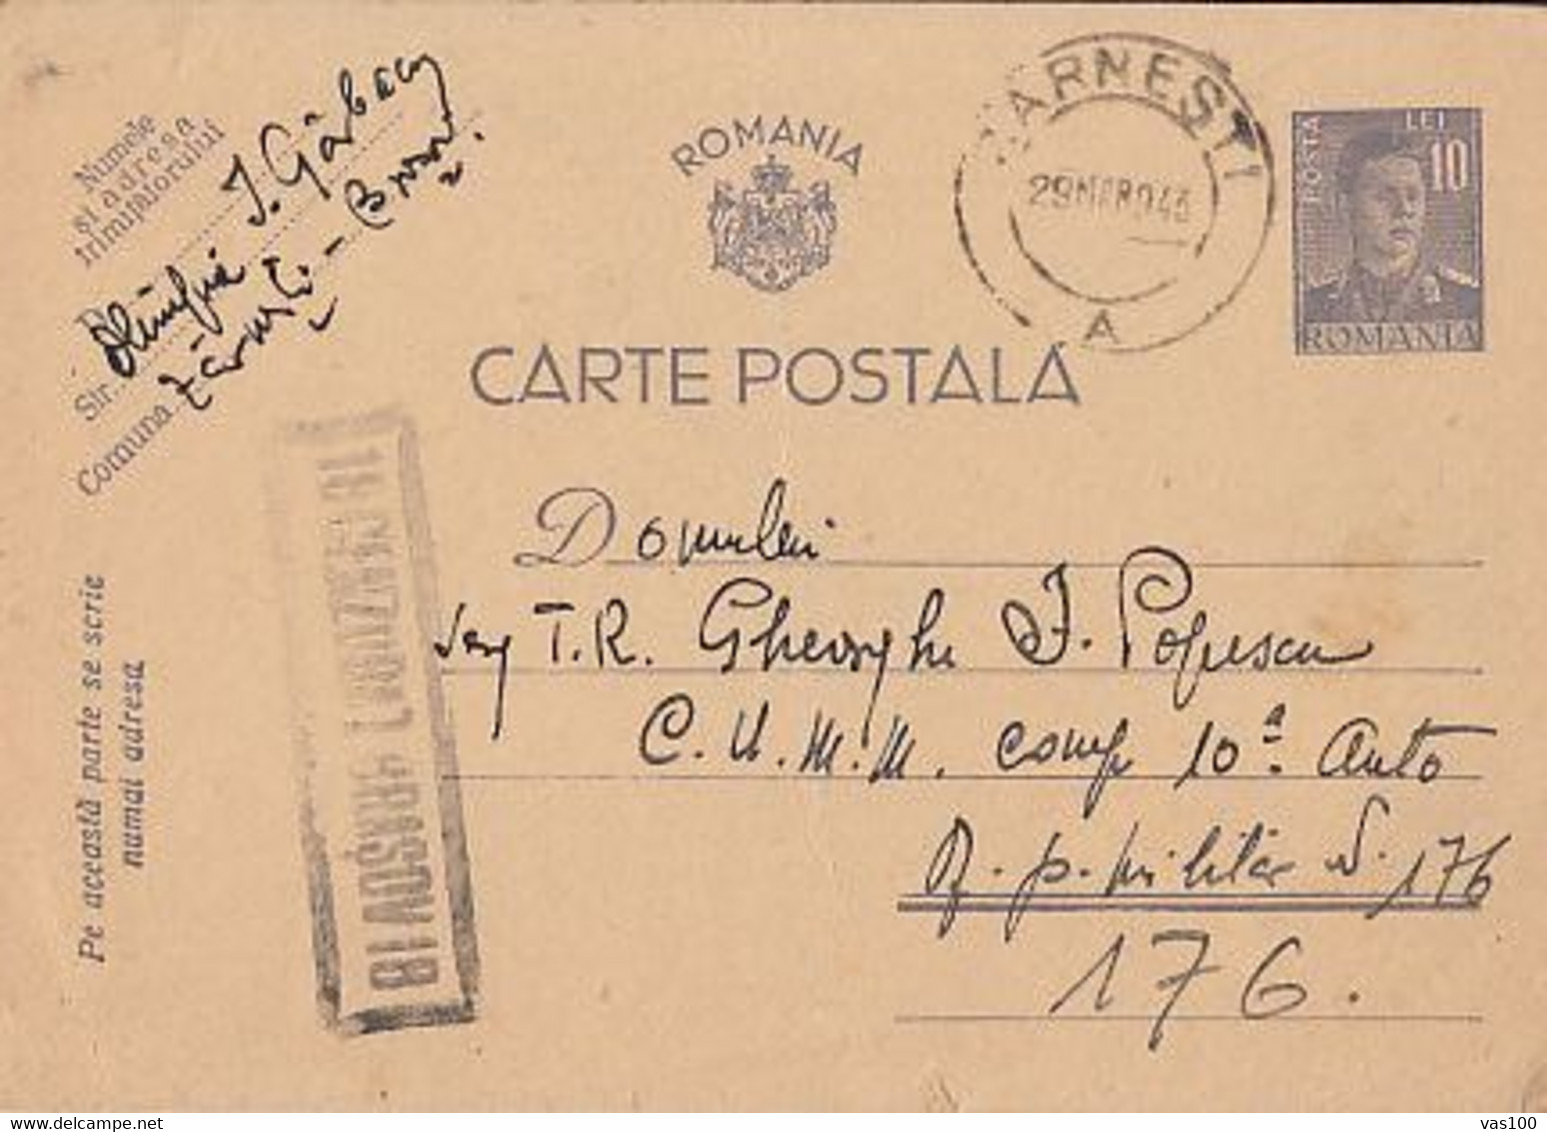 WW2 LETTERS, CENSORED BRASOV NR 18, KING MICHAEL PC STATIONERY, ENTIER POSTAL, 1943, ROMANIA - Lettres 2ème Guerre Mondiale